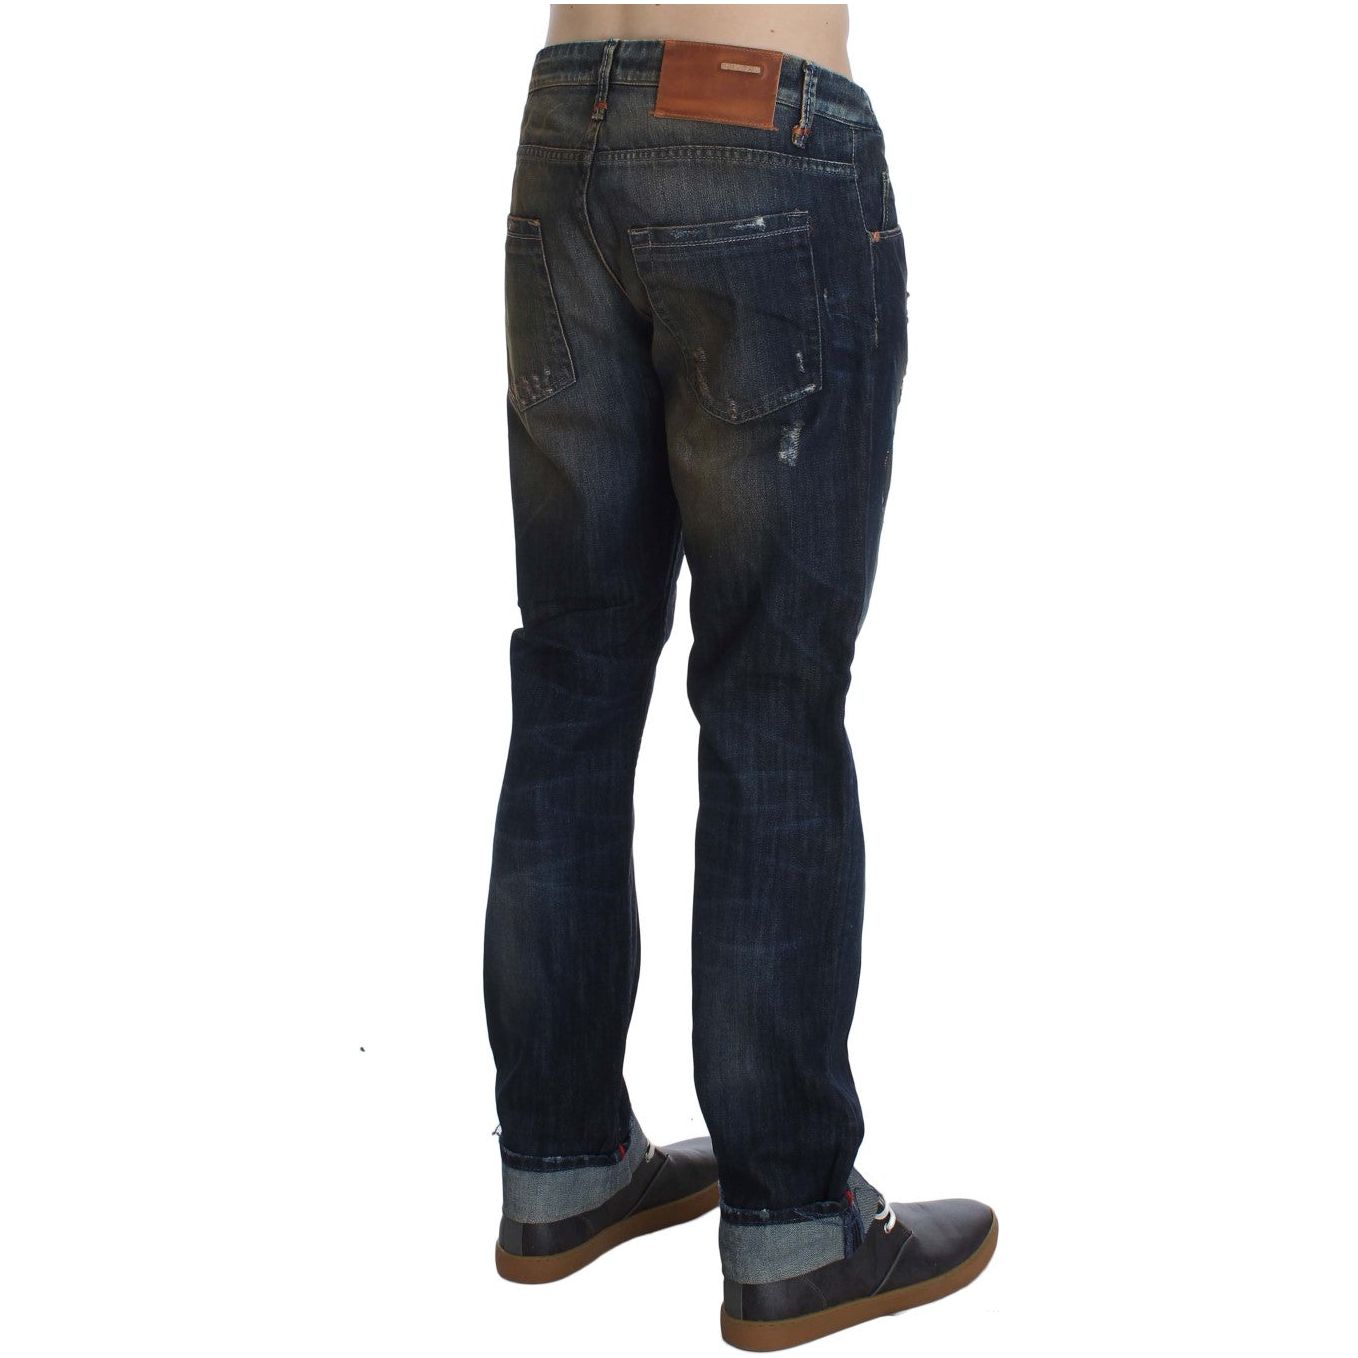 Acht Elegant Straight Fit Men's Denim Jeans blue-wash-cotton-regular-straight-fit-jeans-1 298995-blue-wash-cotton-regular-straight-fit-jeans-2.jpg